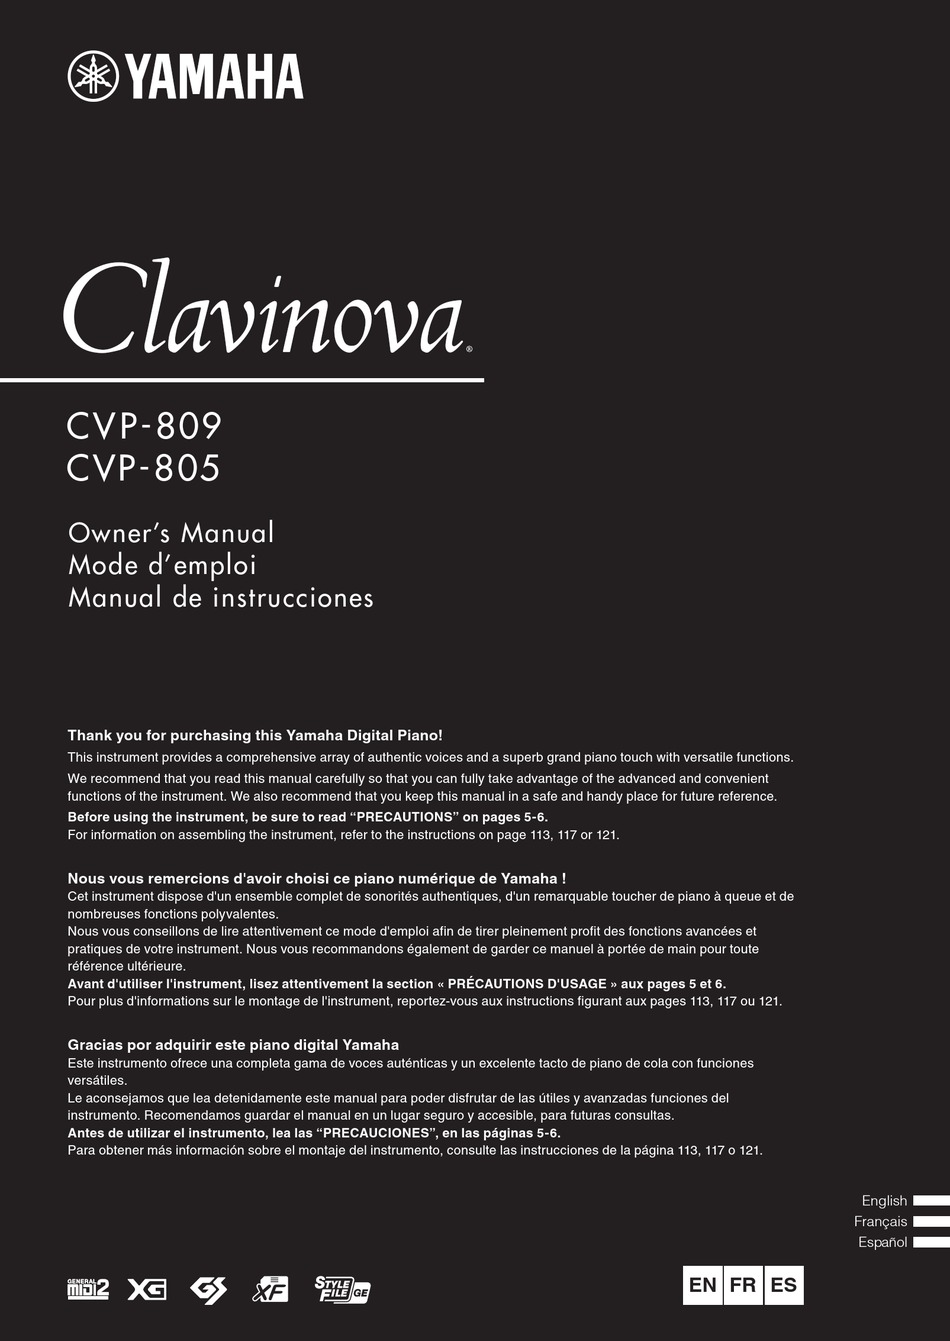 YAMAHA CLAVINOVA CVP-809 OWNER'S MANUAL Pdf Download | ManualsLib